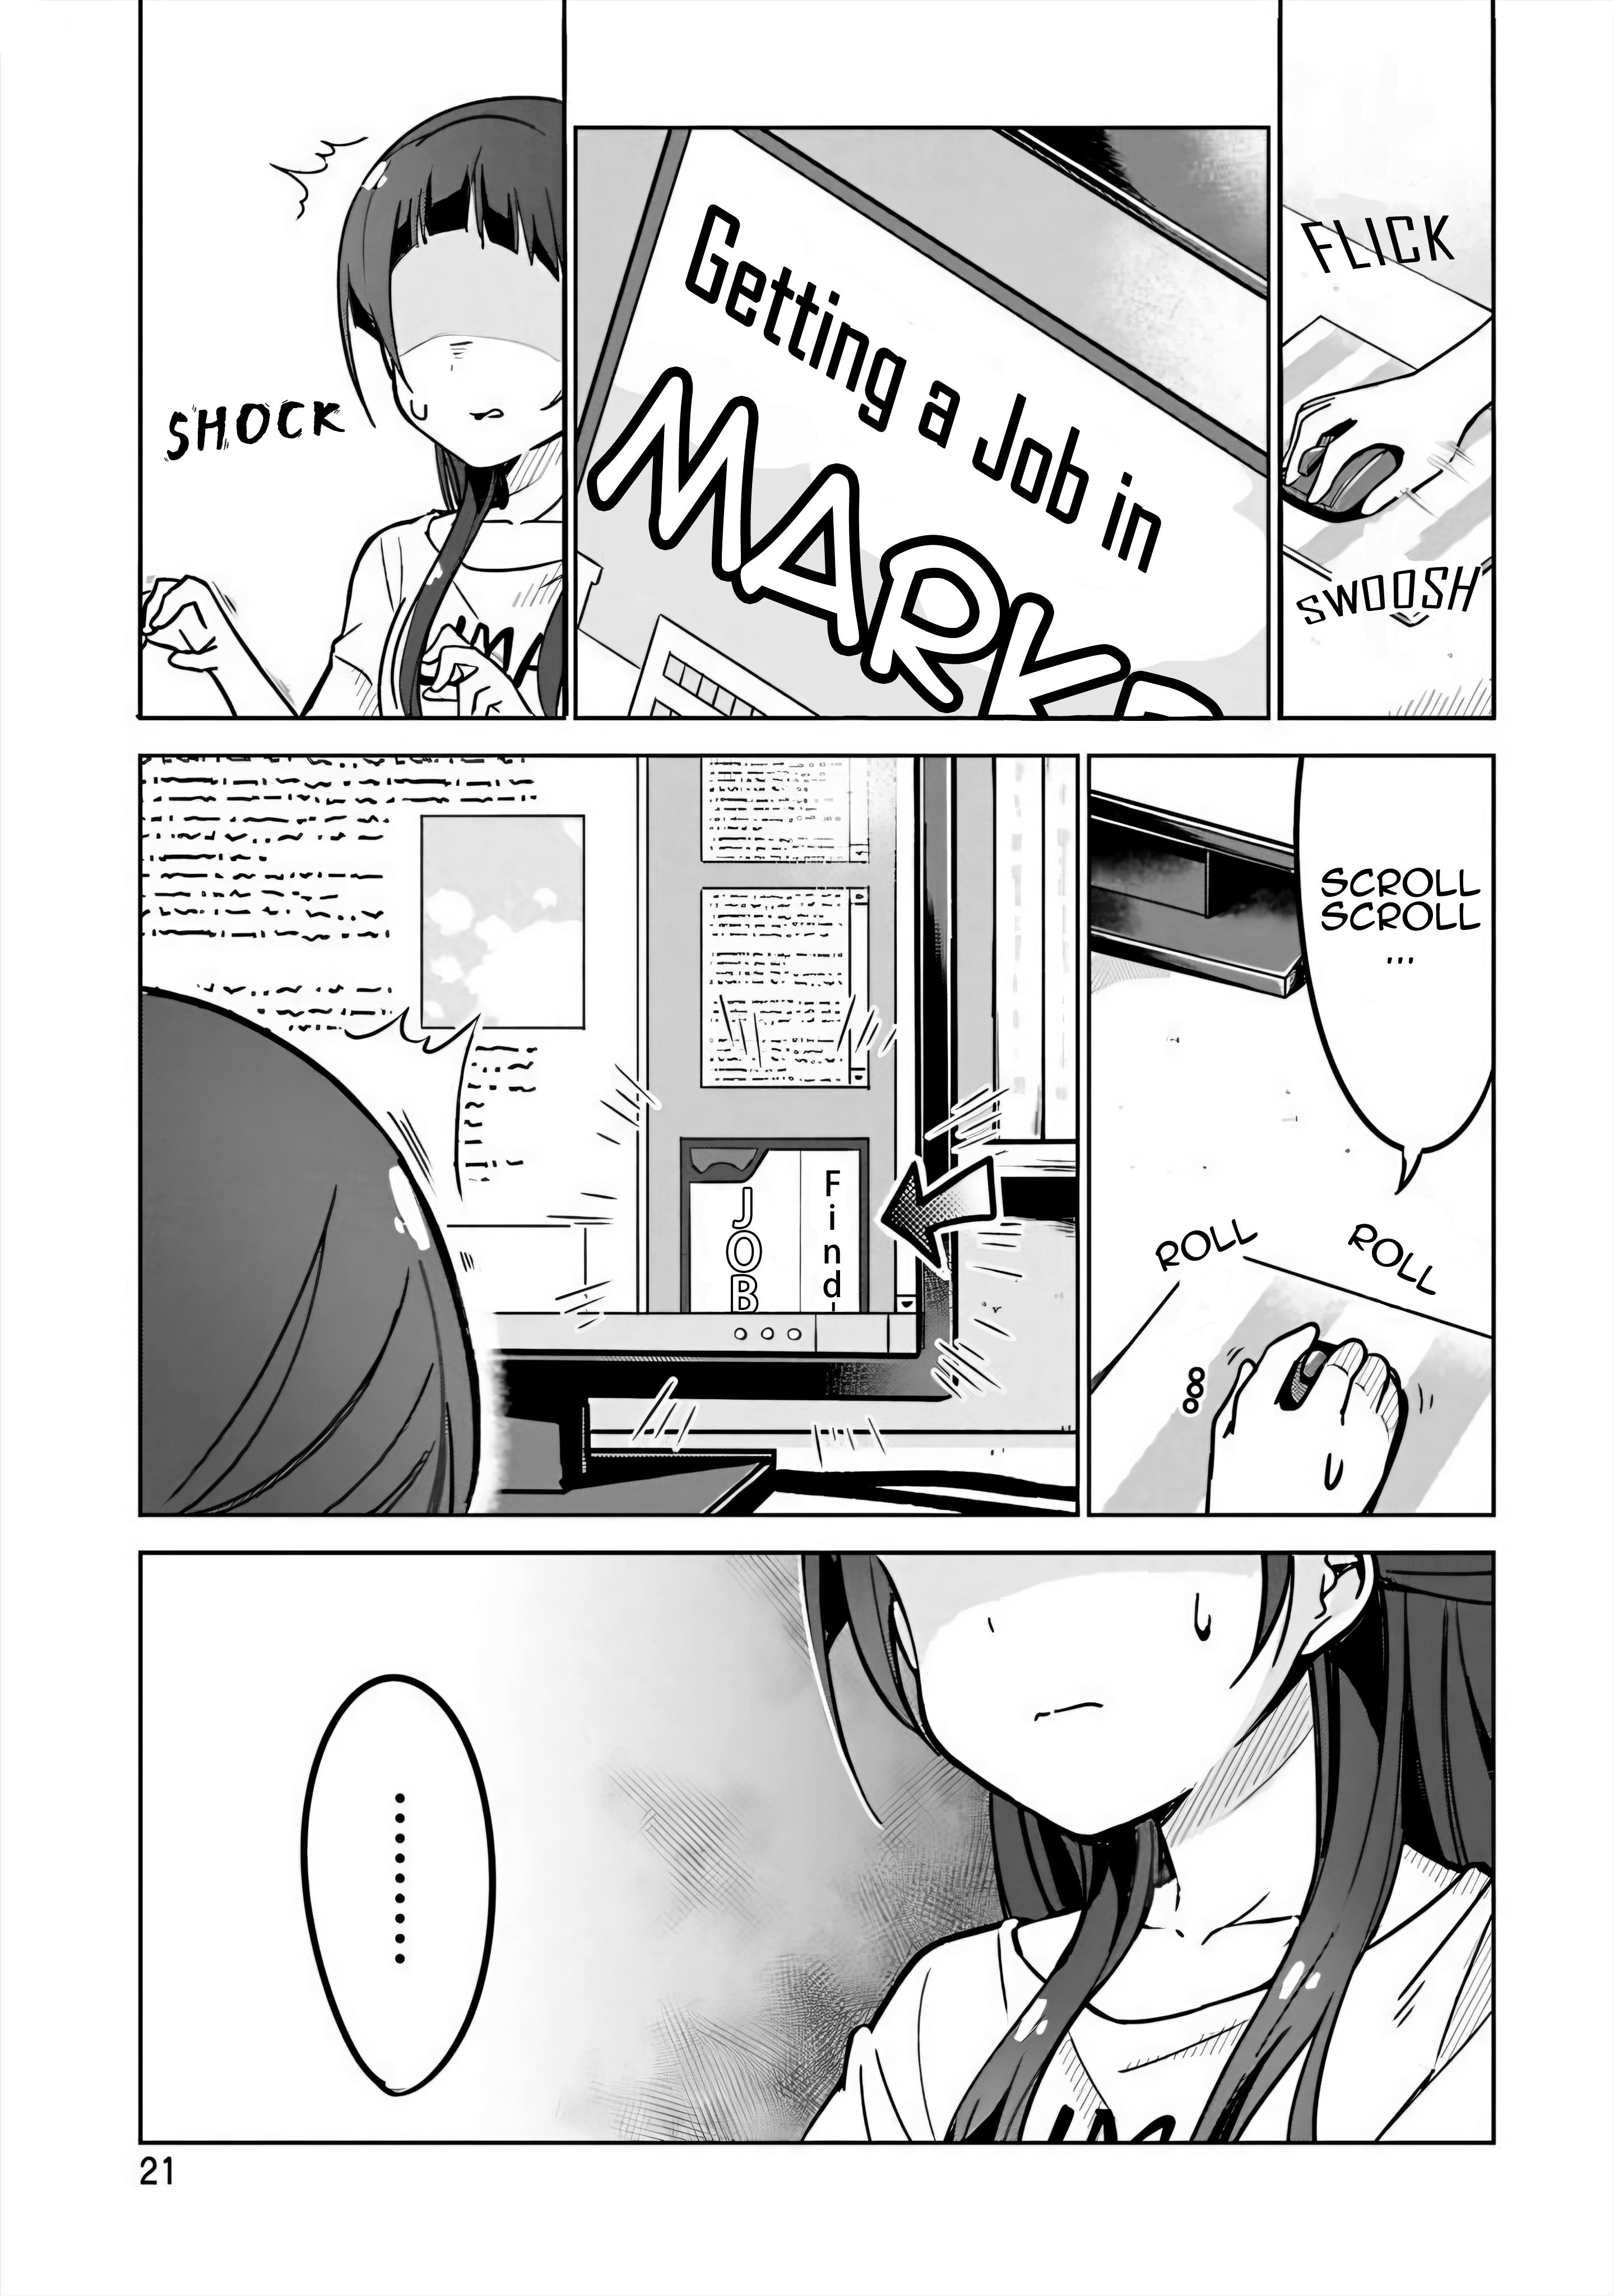 Sakura Quest Side Story: Ririko Oribe's Daily Report Vol 1 Chapter 2 #5